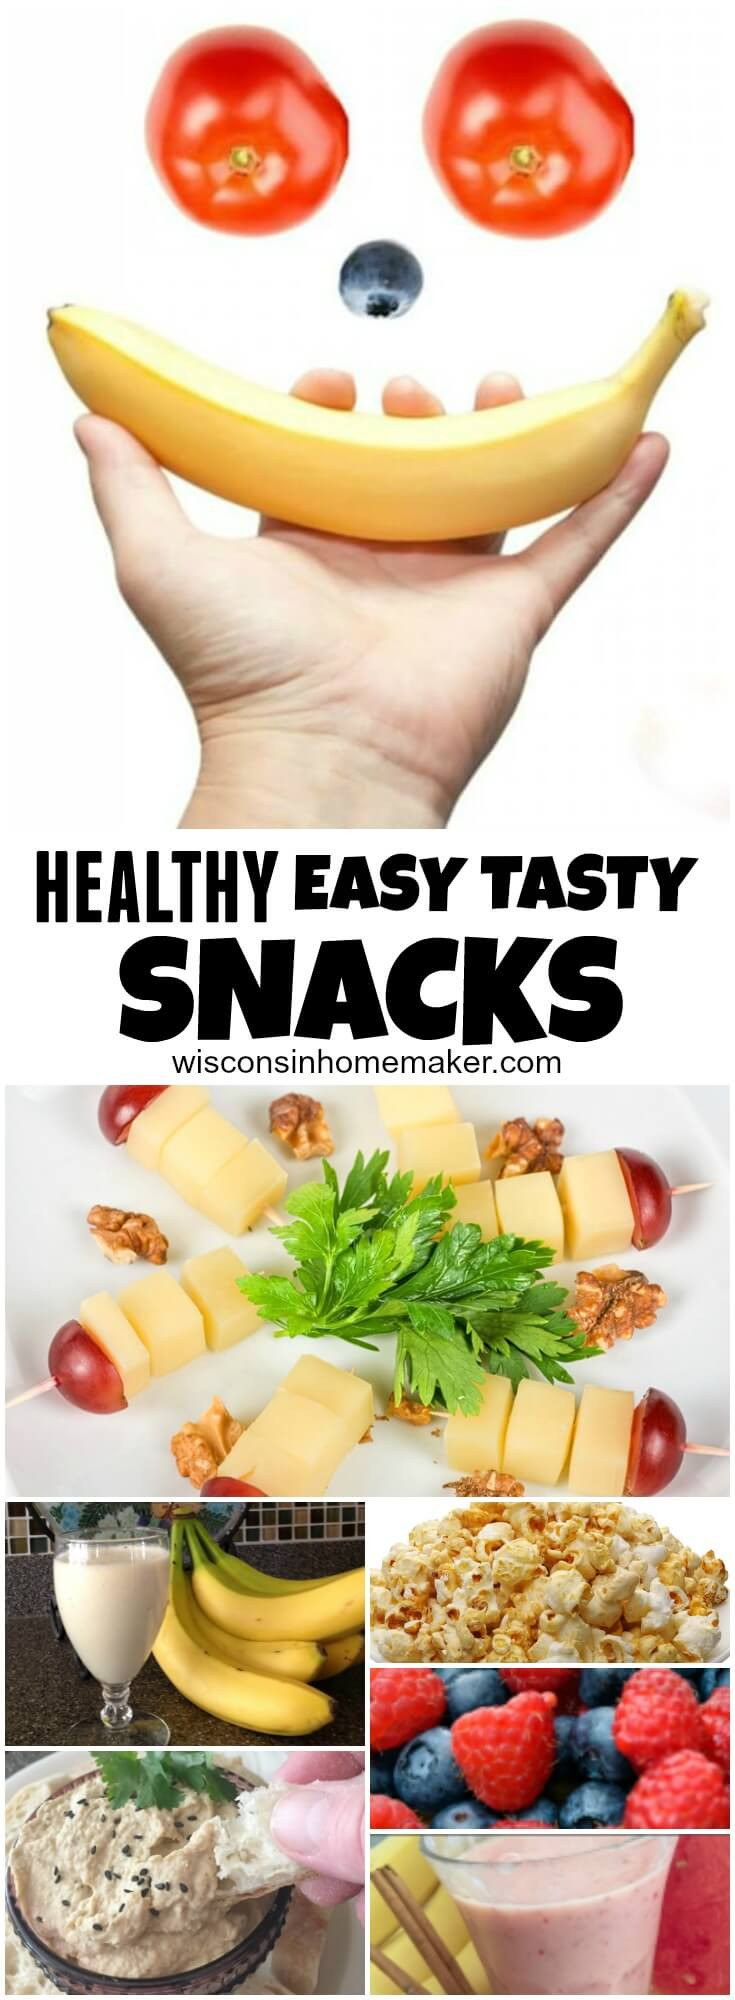 Healthy Tasty Snacks
 Healthy but Easy Tasty Snacks Recipes